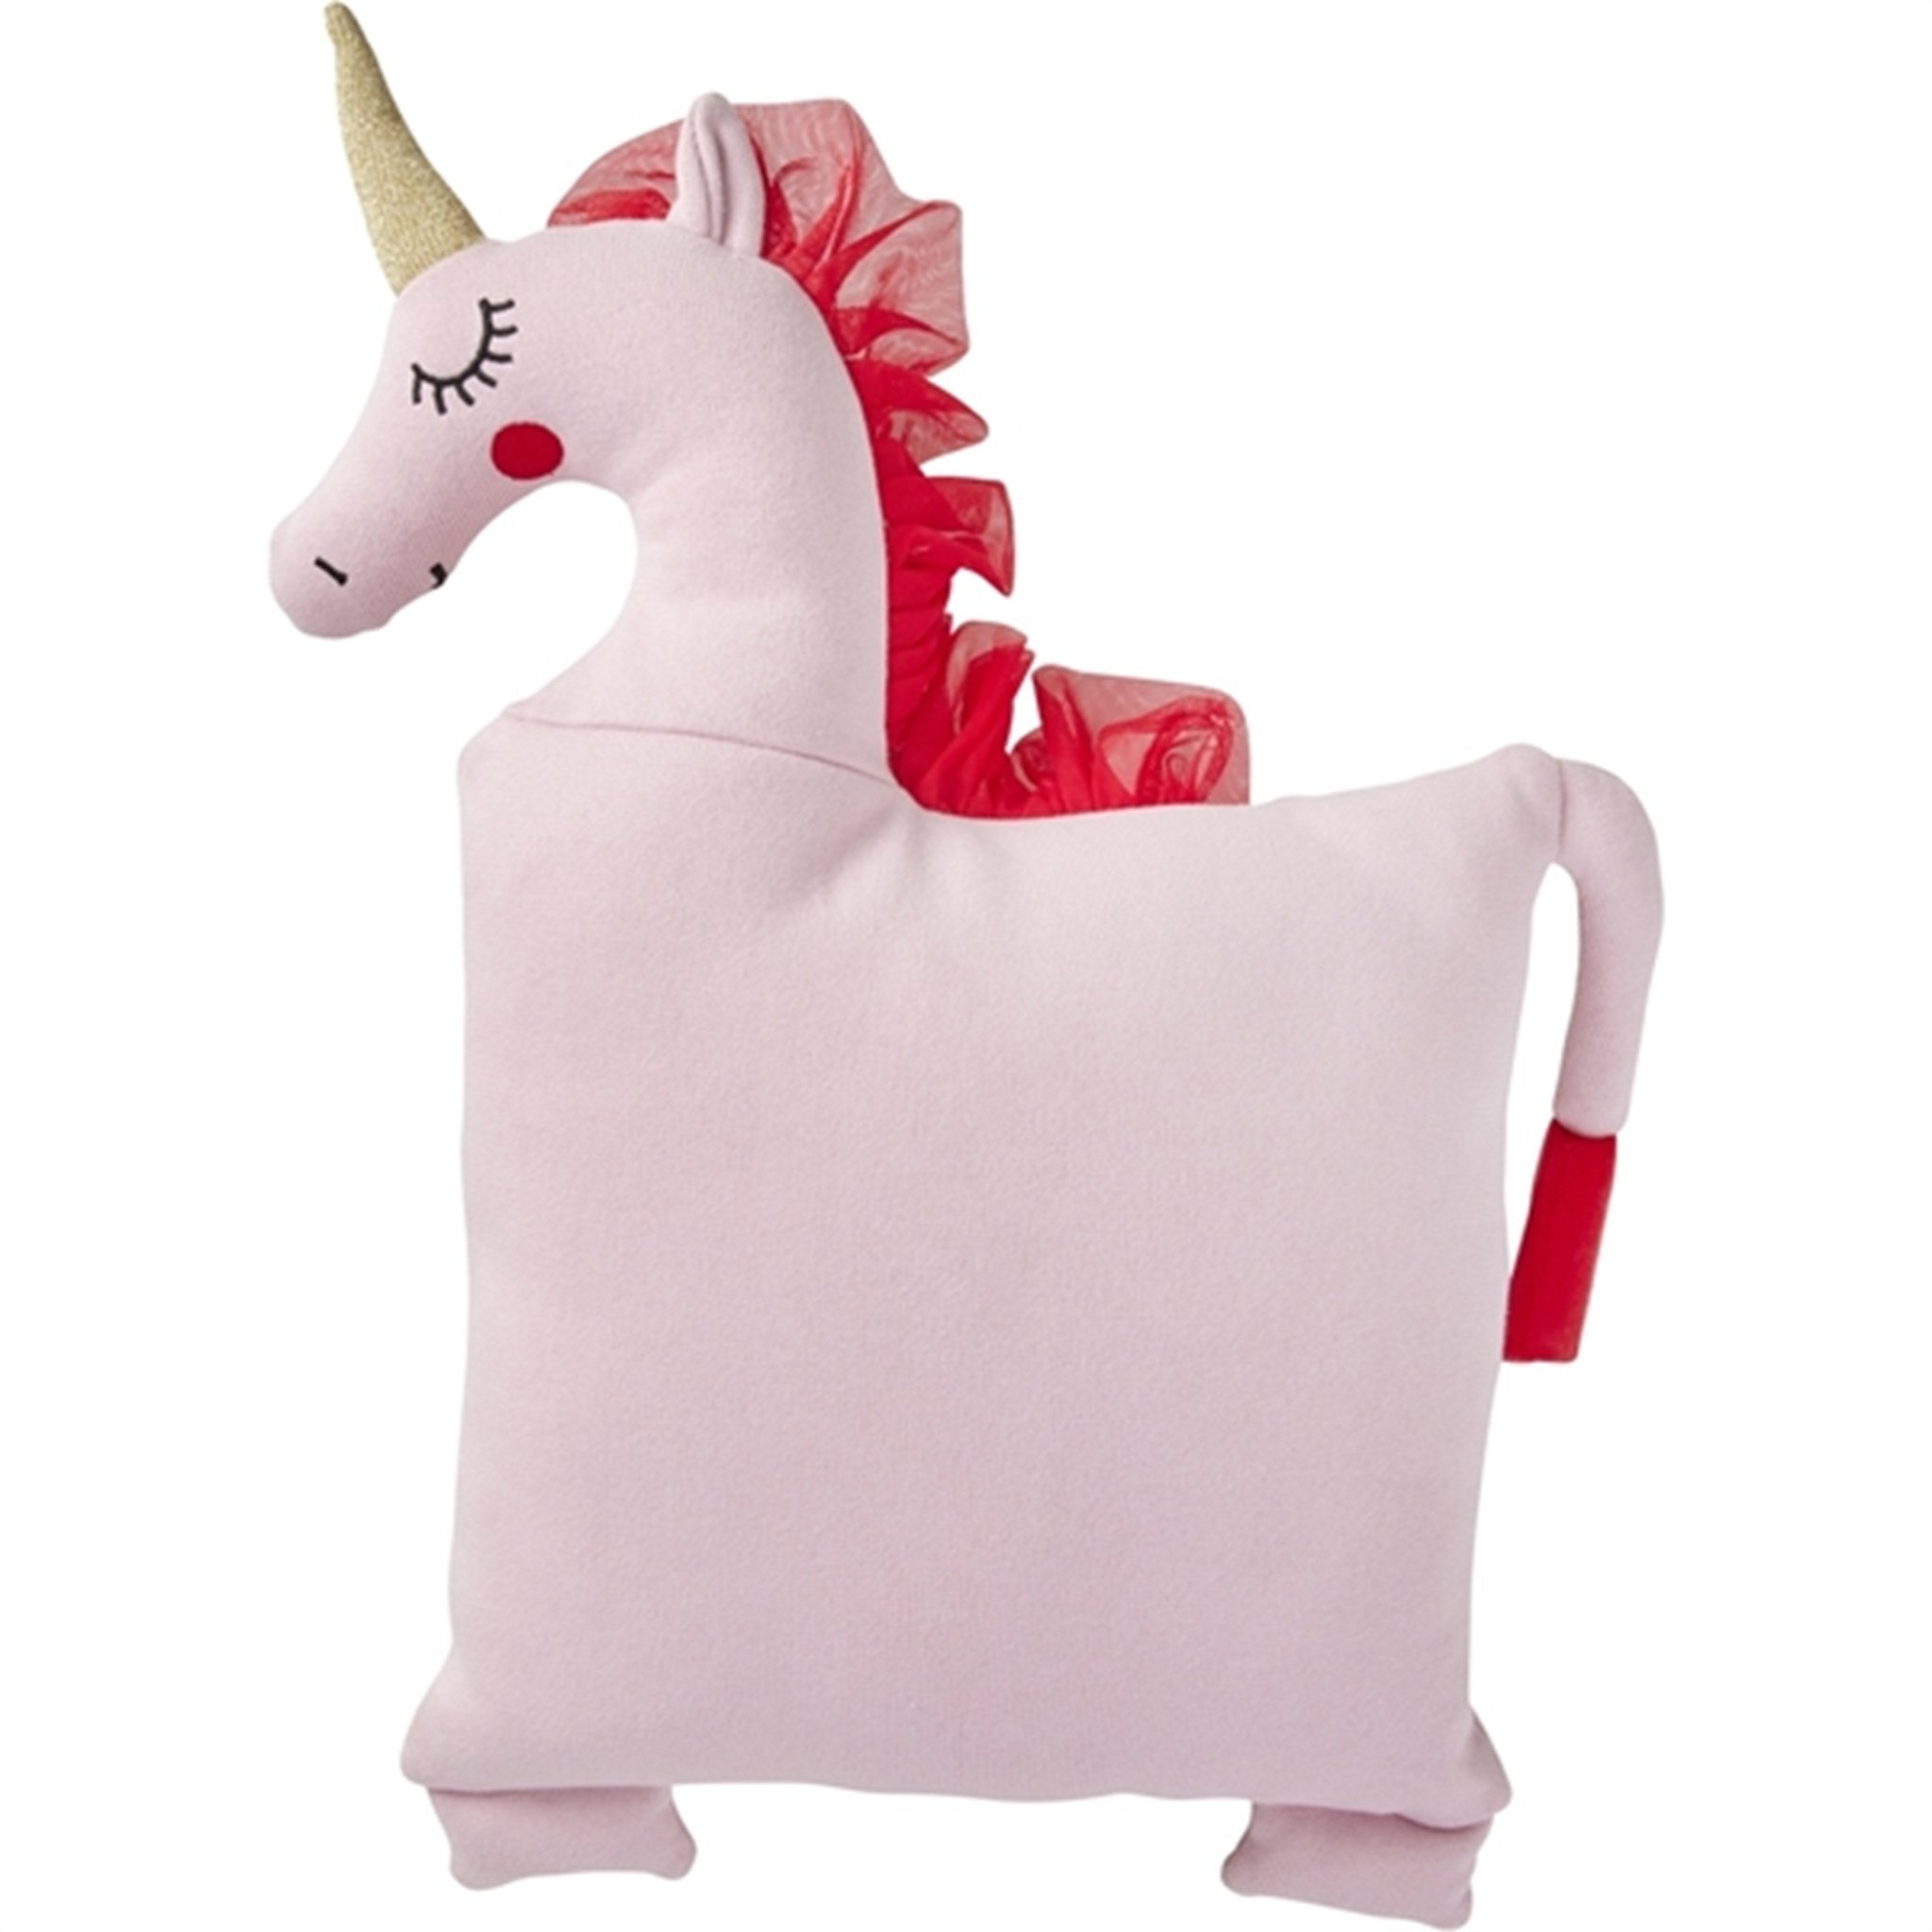 RICE Soft Pink Unicorn Cushion